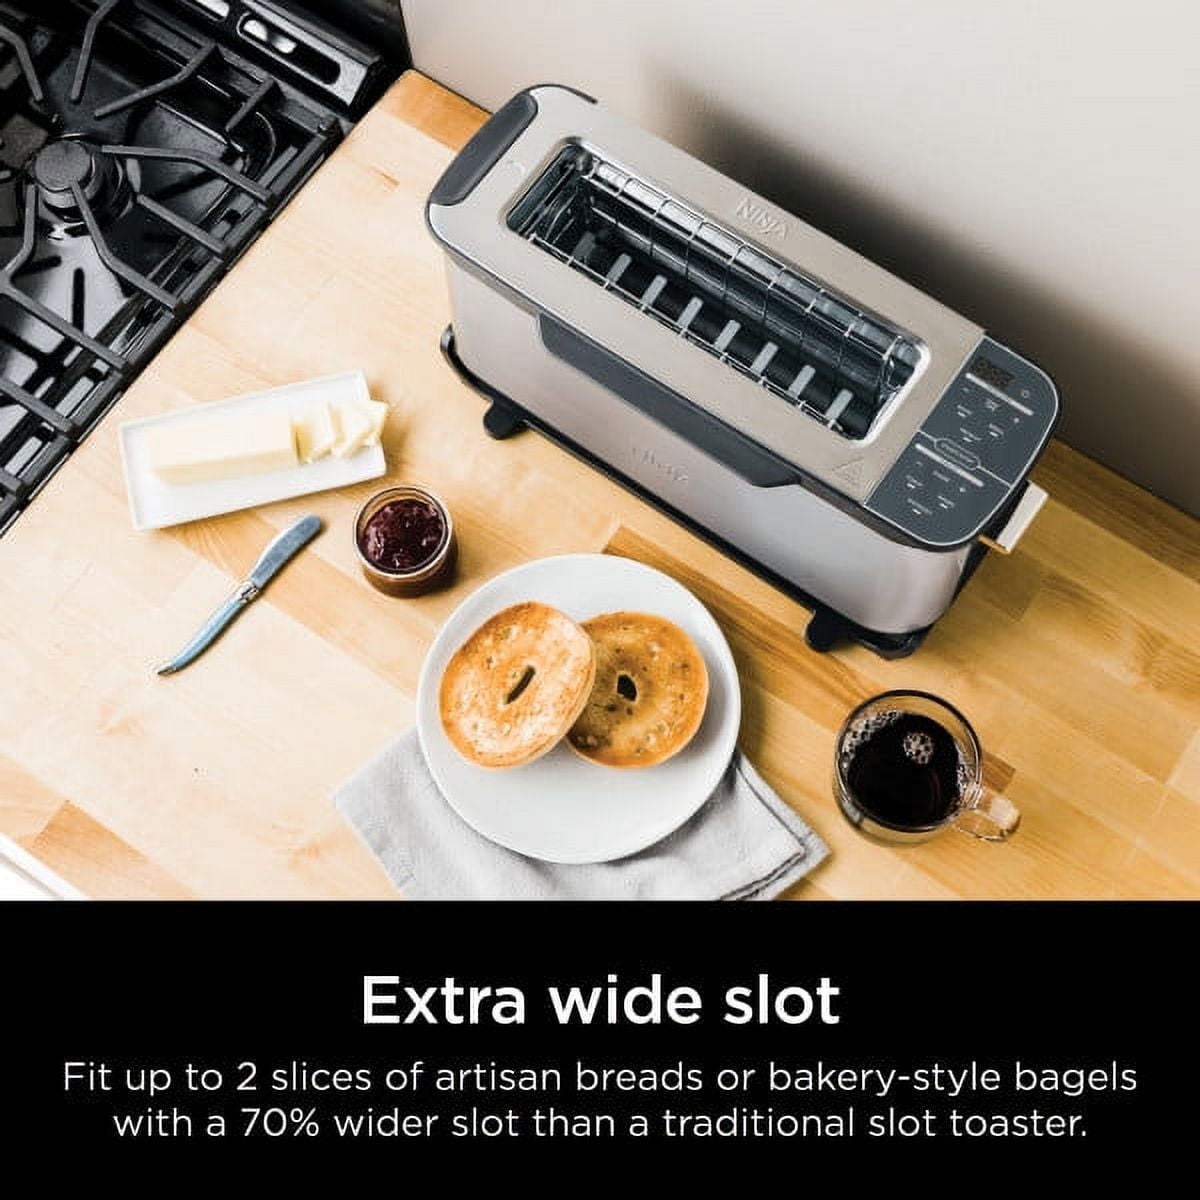 Ninja Foodi Flip Toaster Oven Replacement Base/Oven Unit ST101